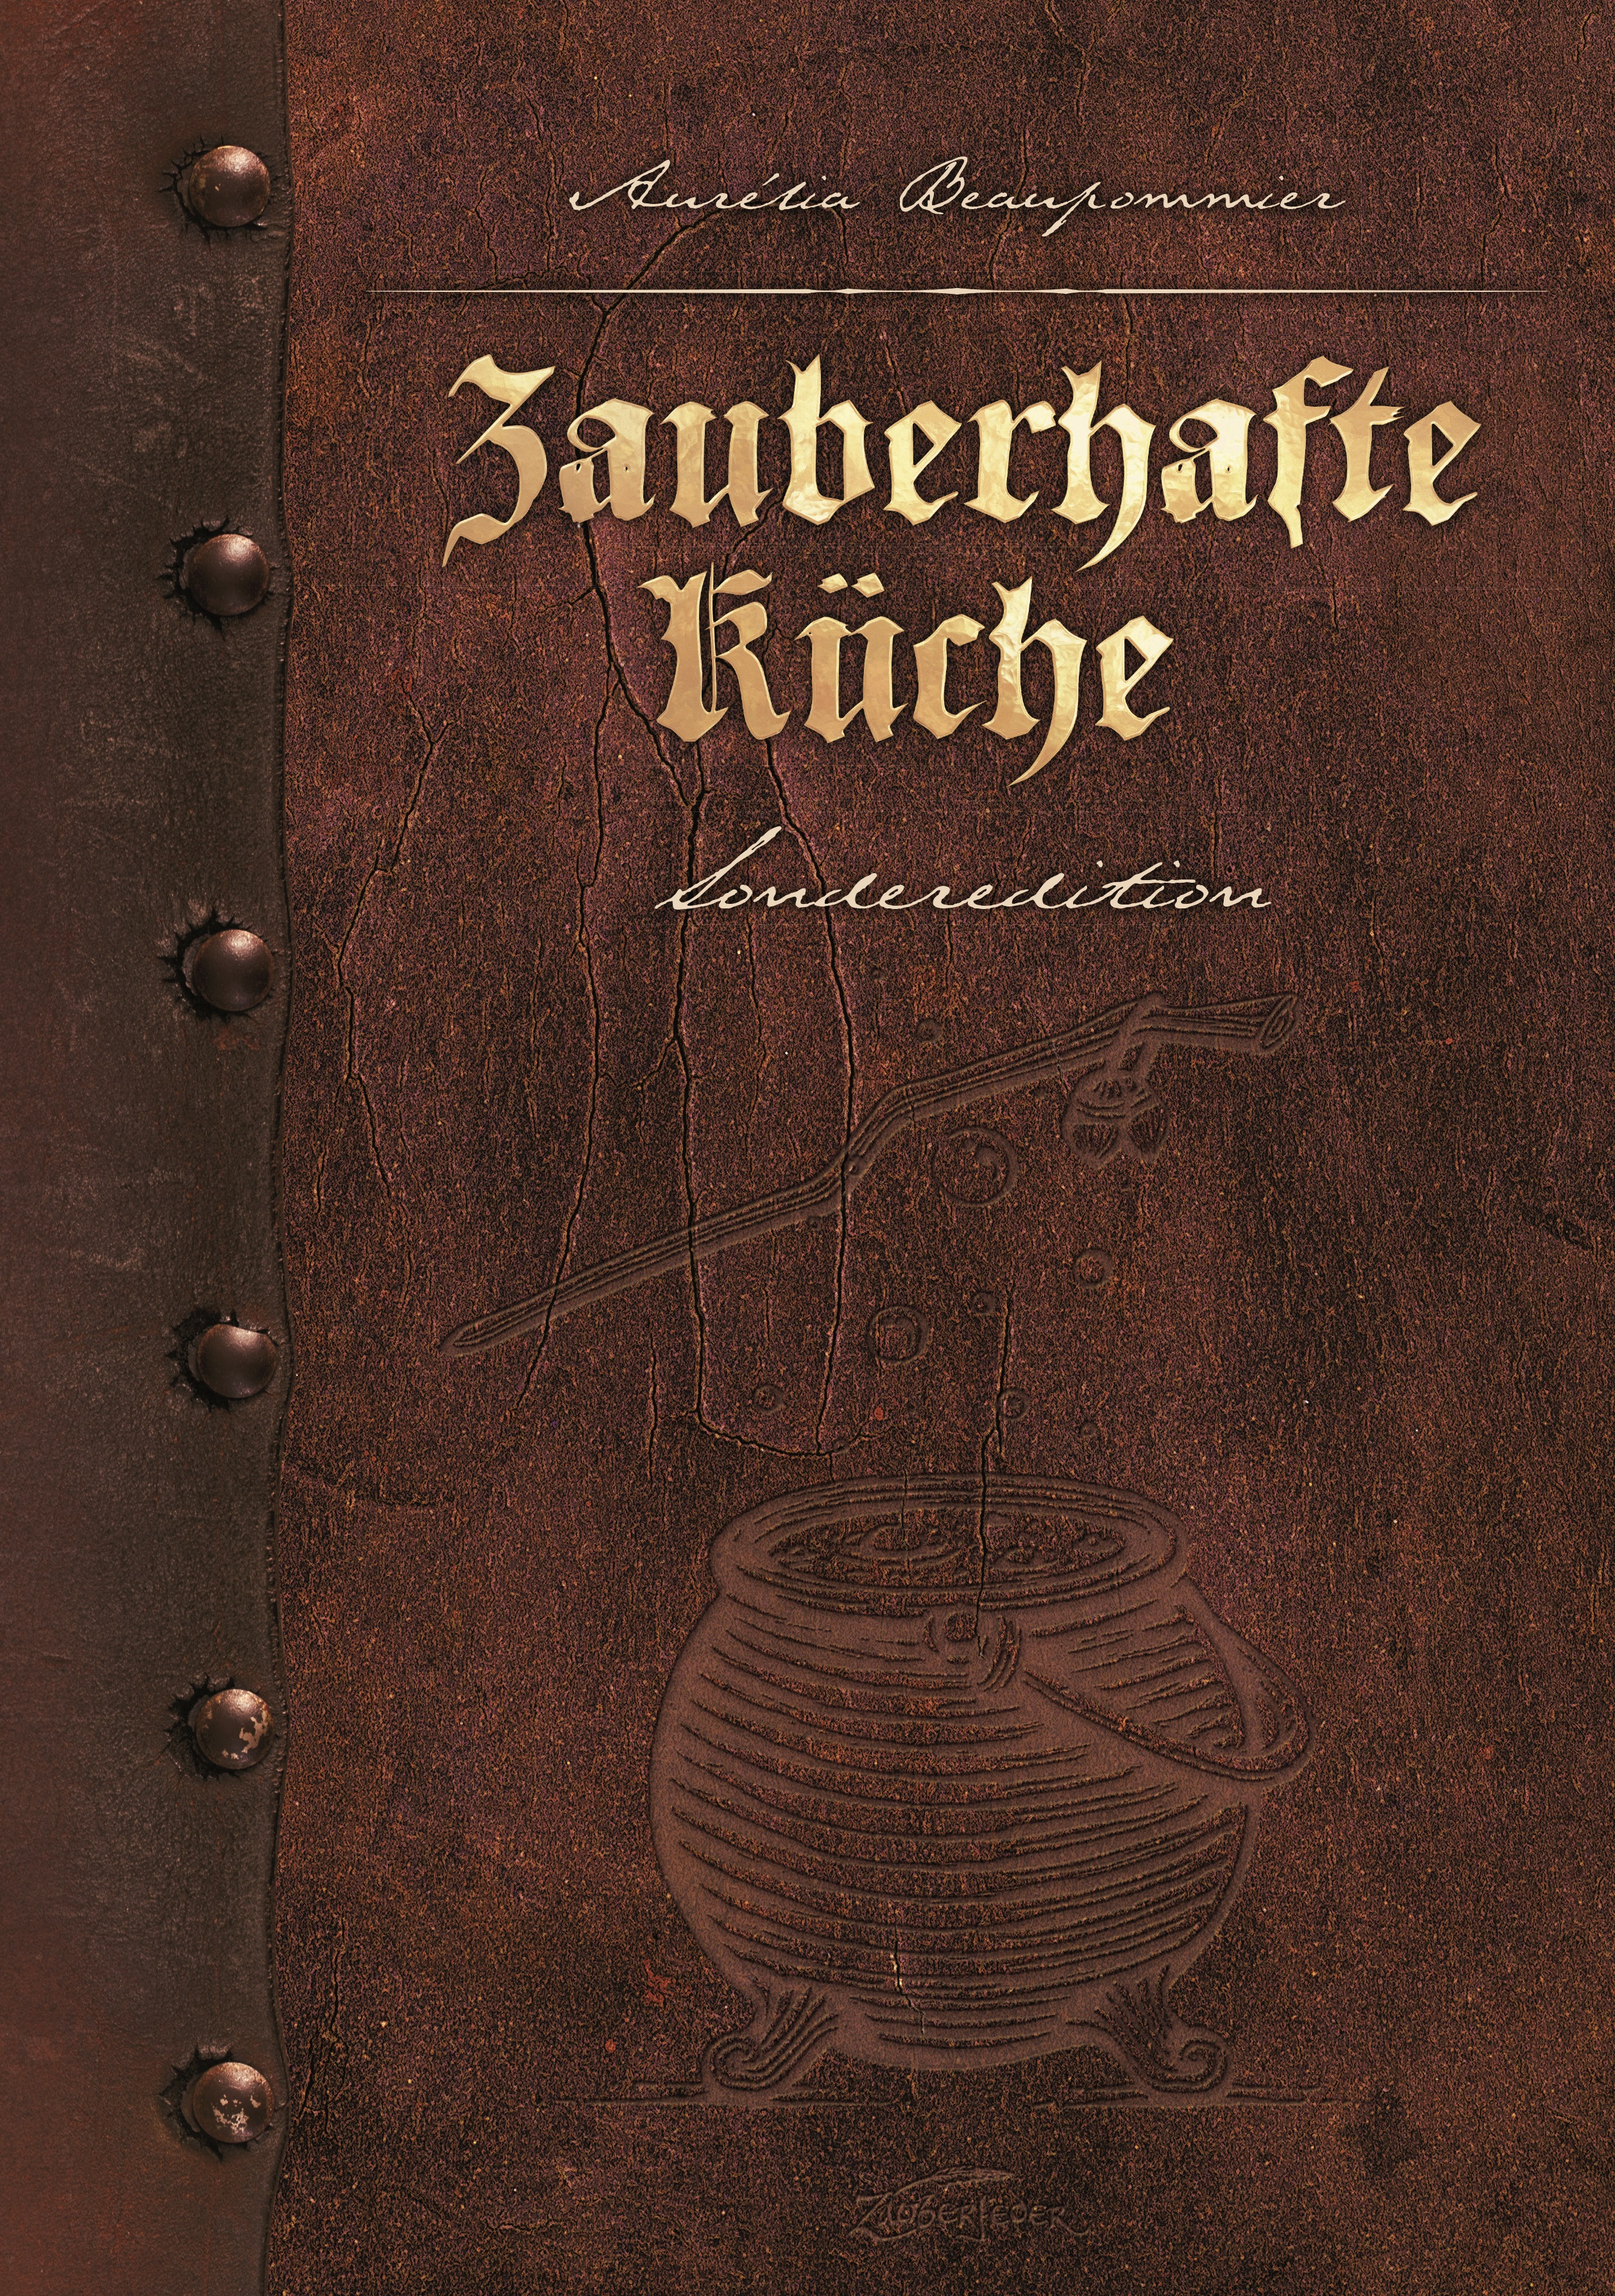 zauberhafte-kuche-kochbuch-sonderedition-4095-sw11955